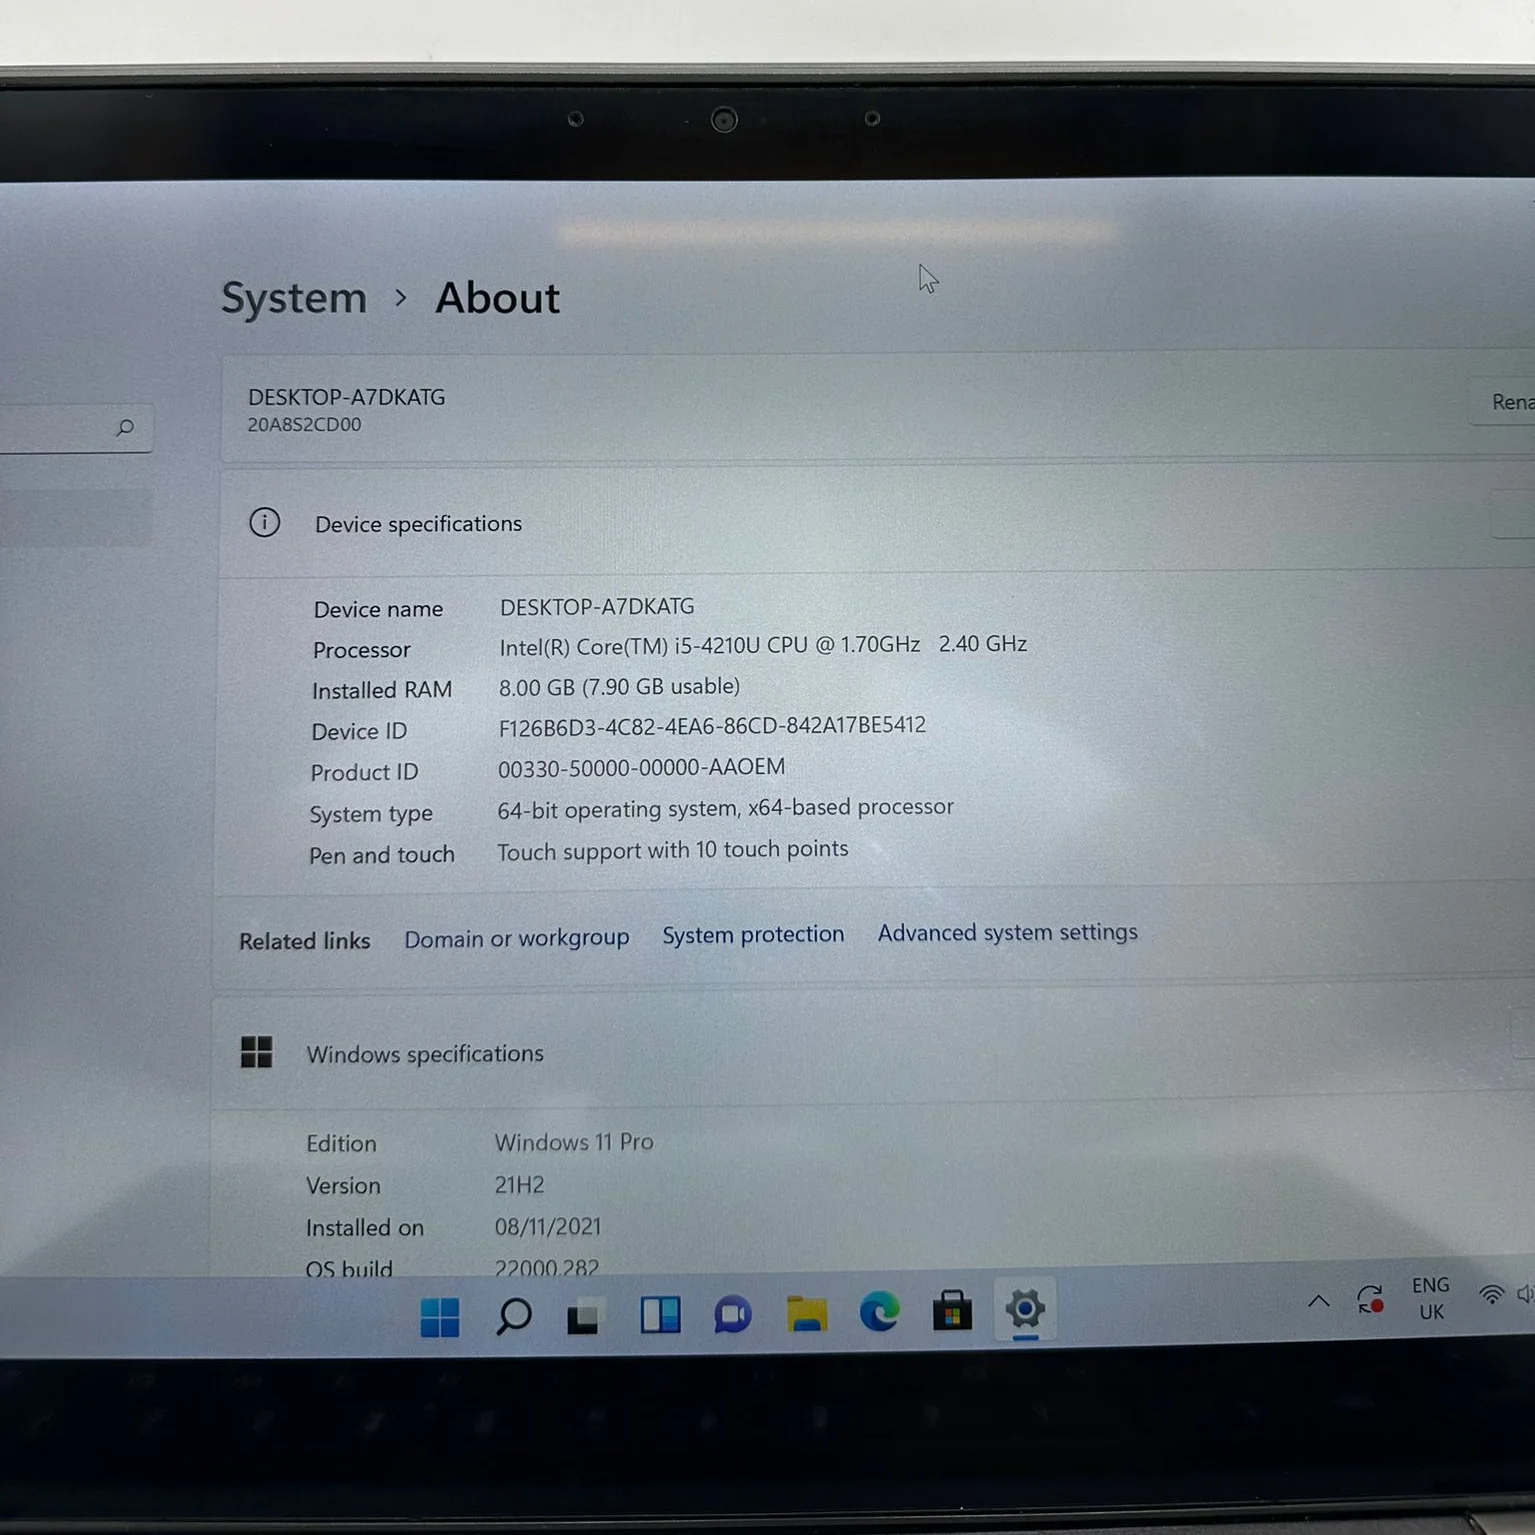 Lenovo ThinkPad x1 Carbon 4th Gen i5. 4k Resolution Touchscreen and Touchbar edition.